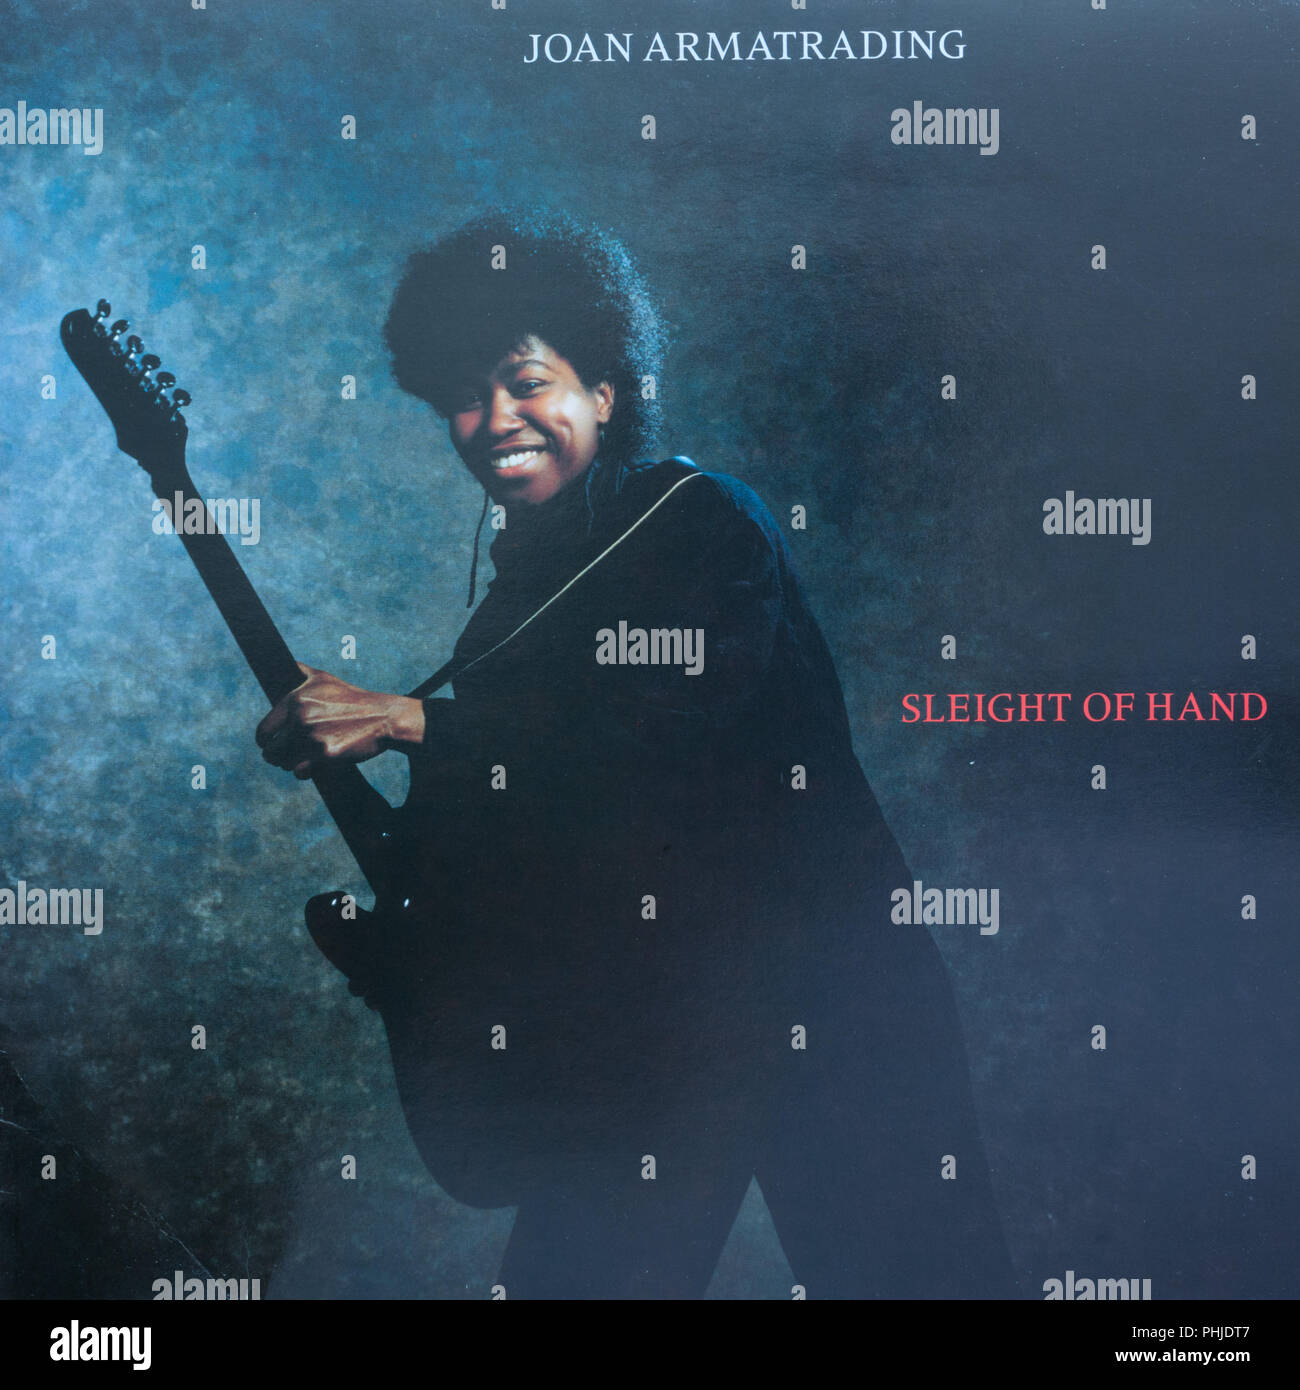 Joan Armatrading Sleight of Hand album cover Stock Photo